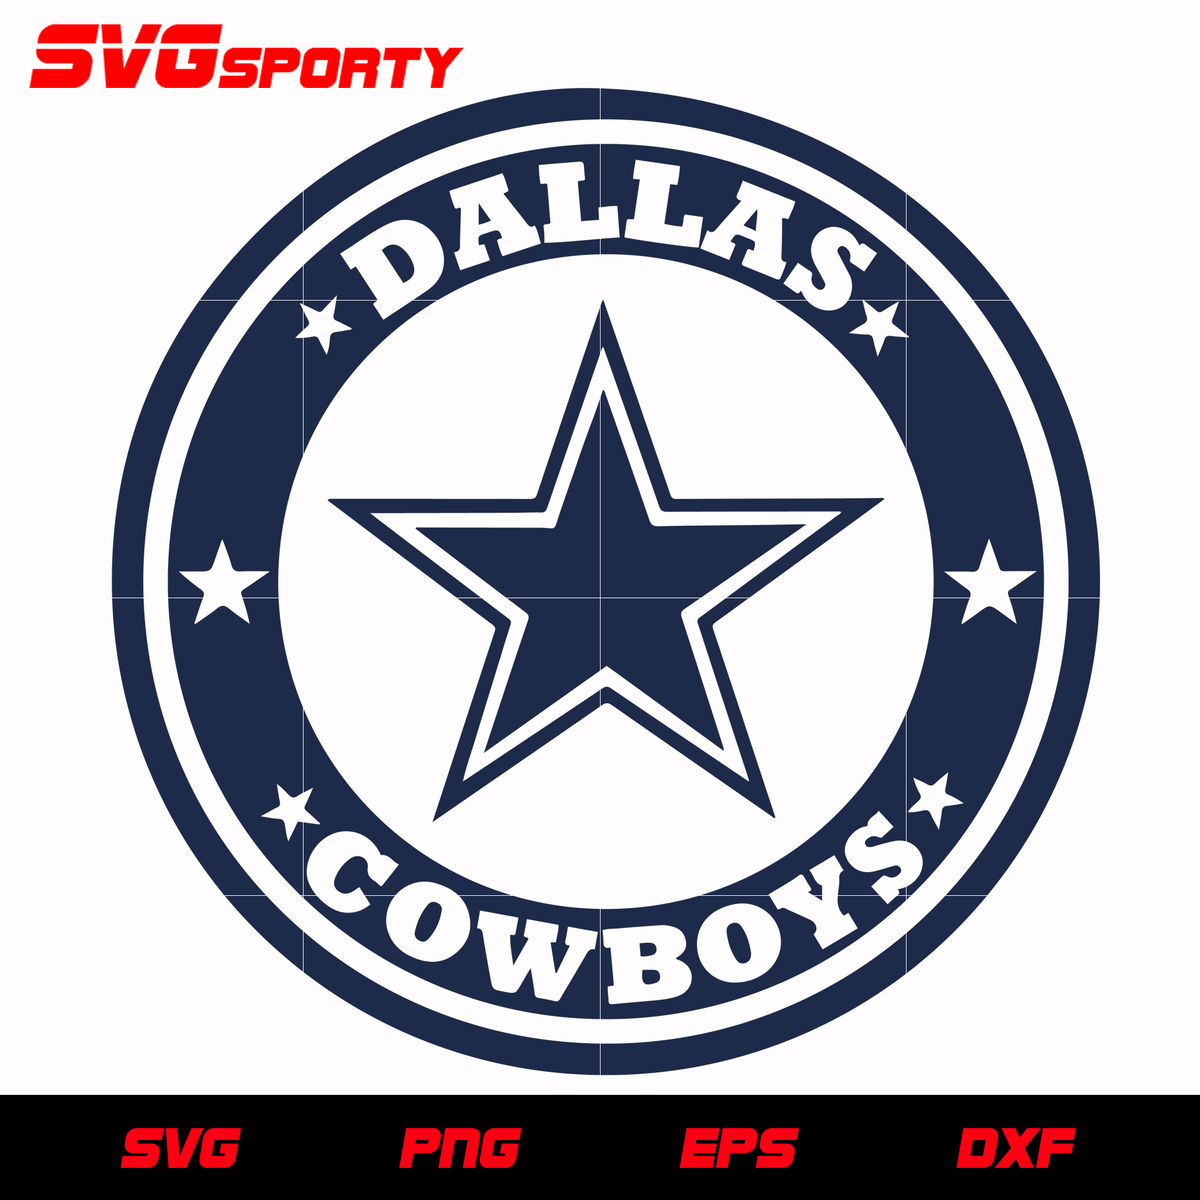 cowboys logo png